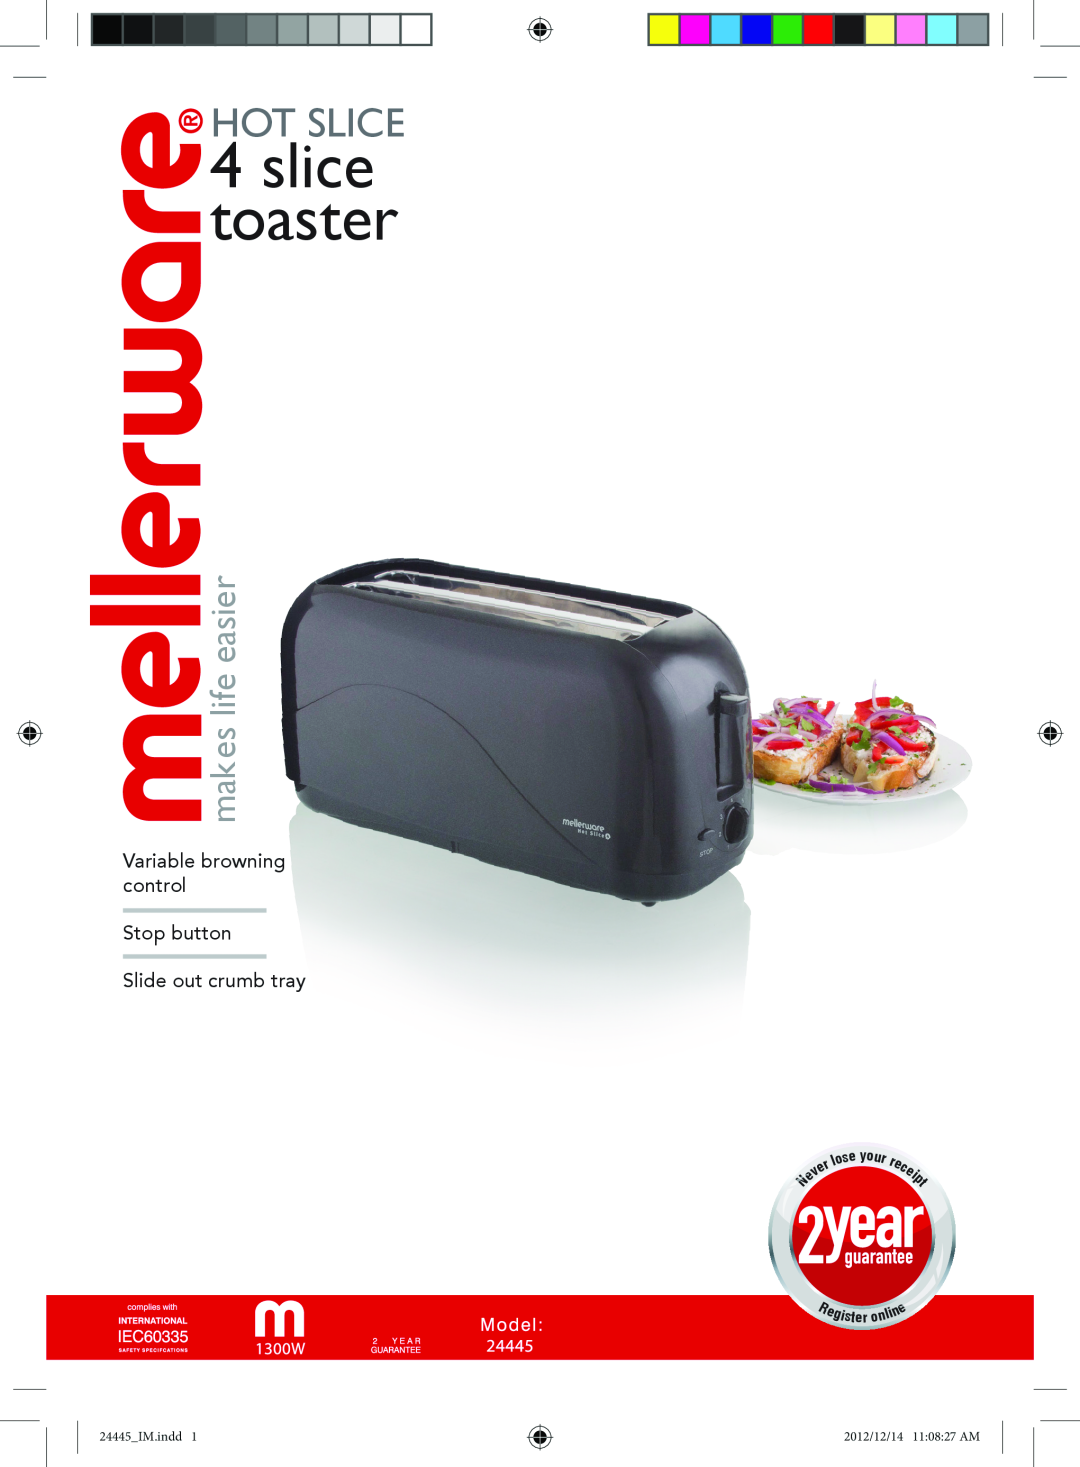 Mellerware 24445 manual rec ei p t, slice toaster, Hot Slice, makes life easier 